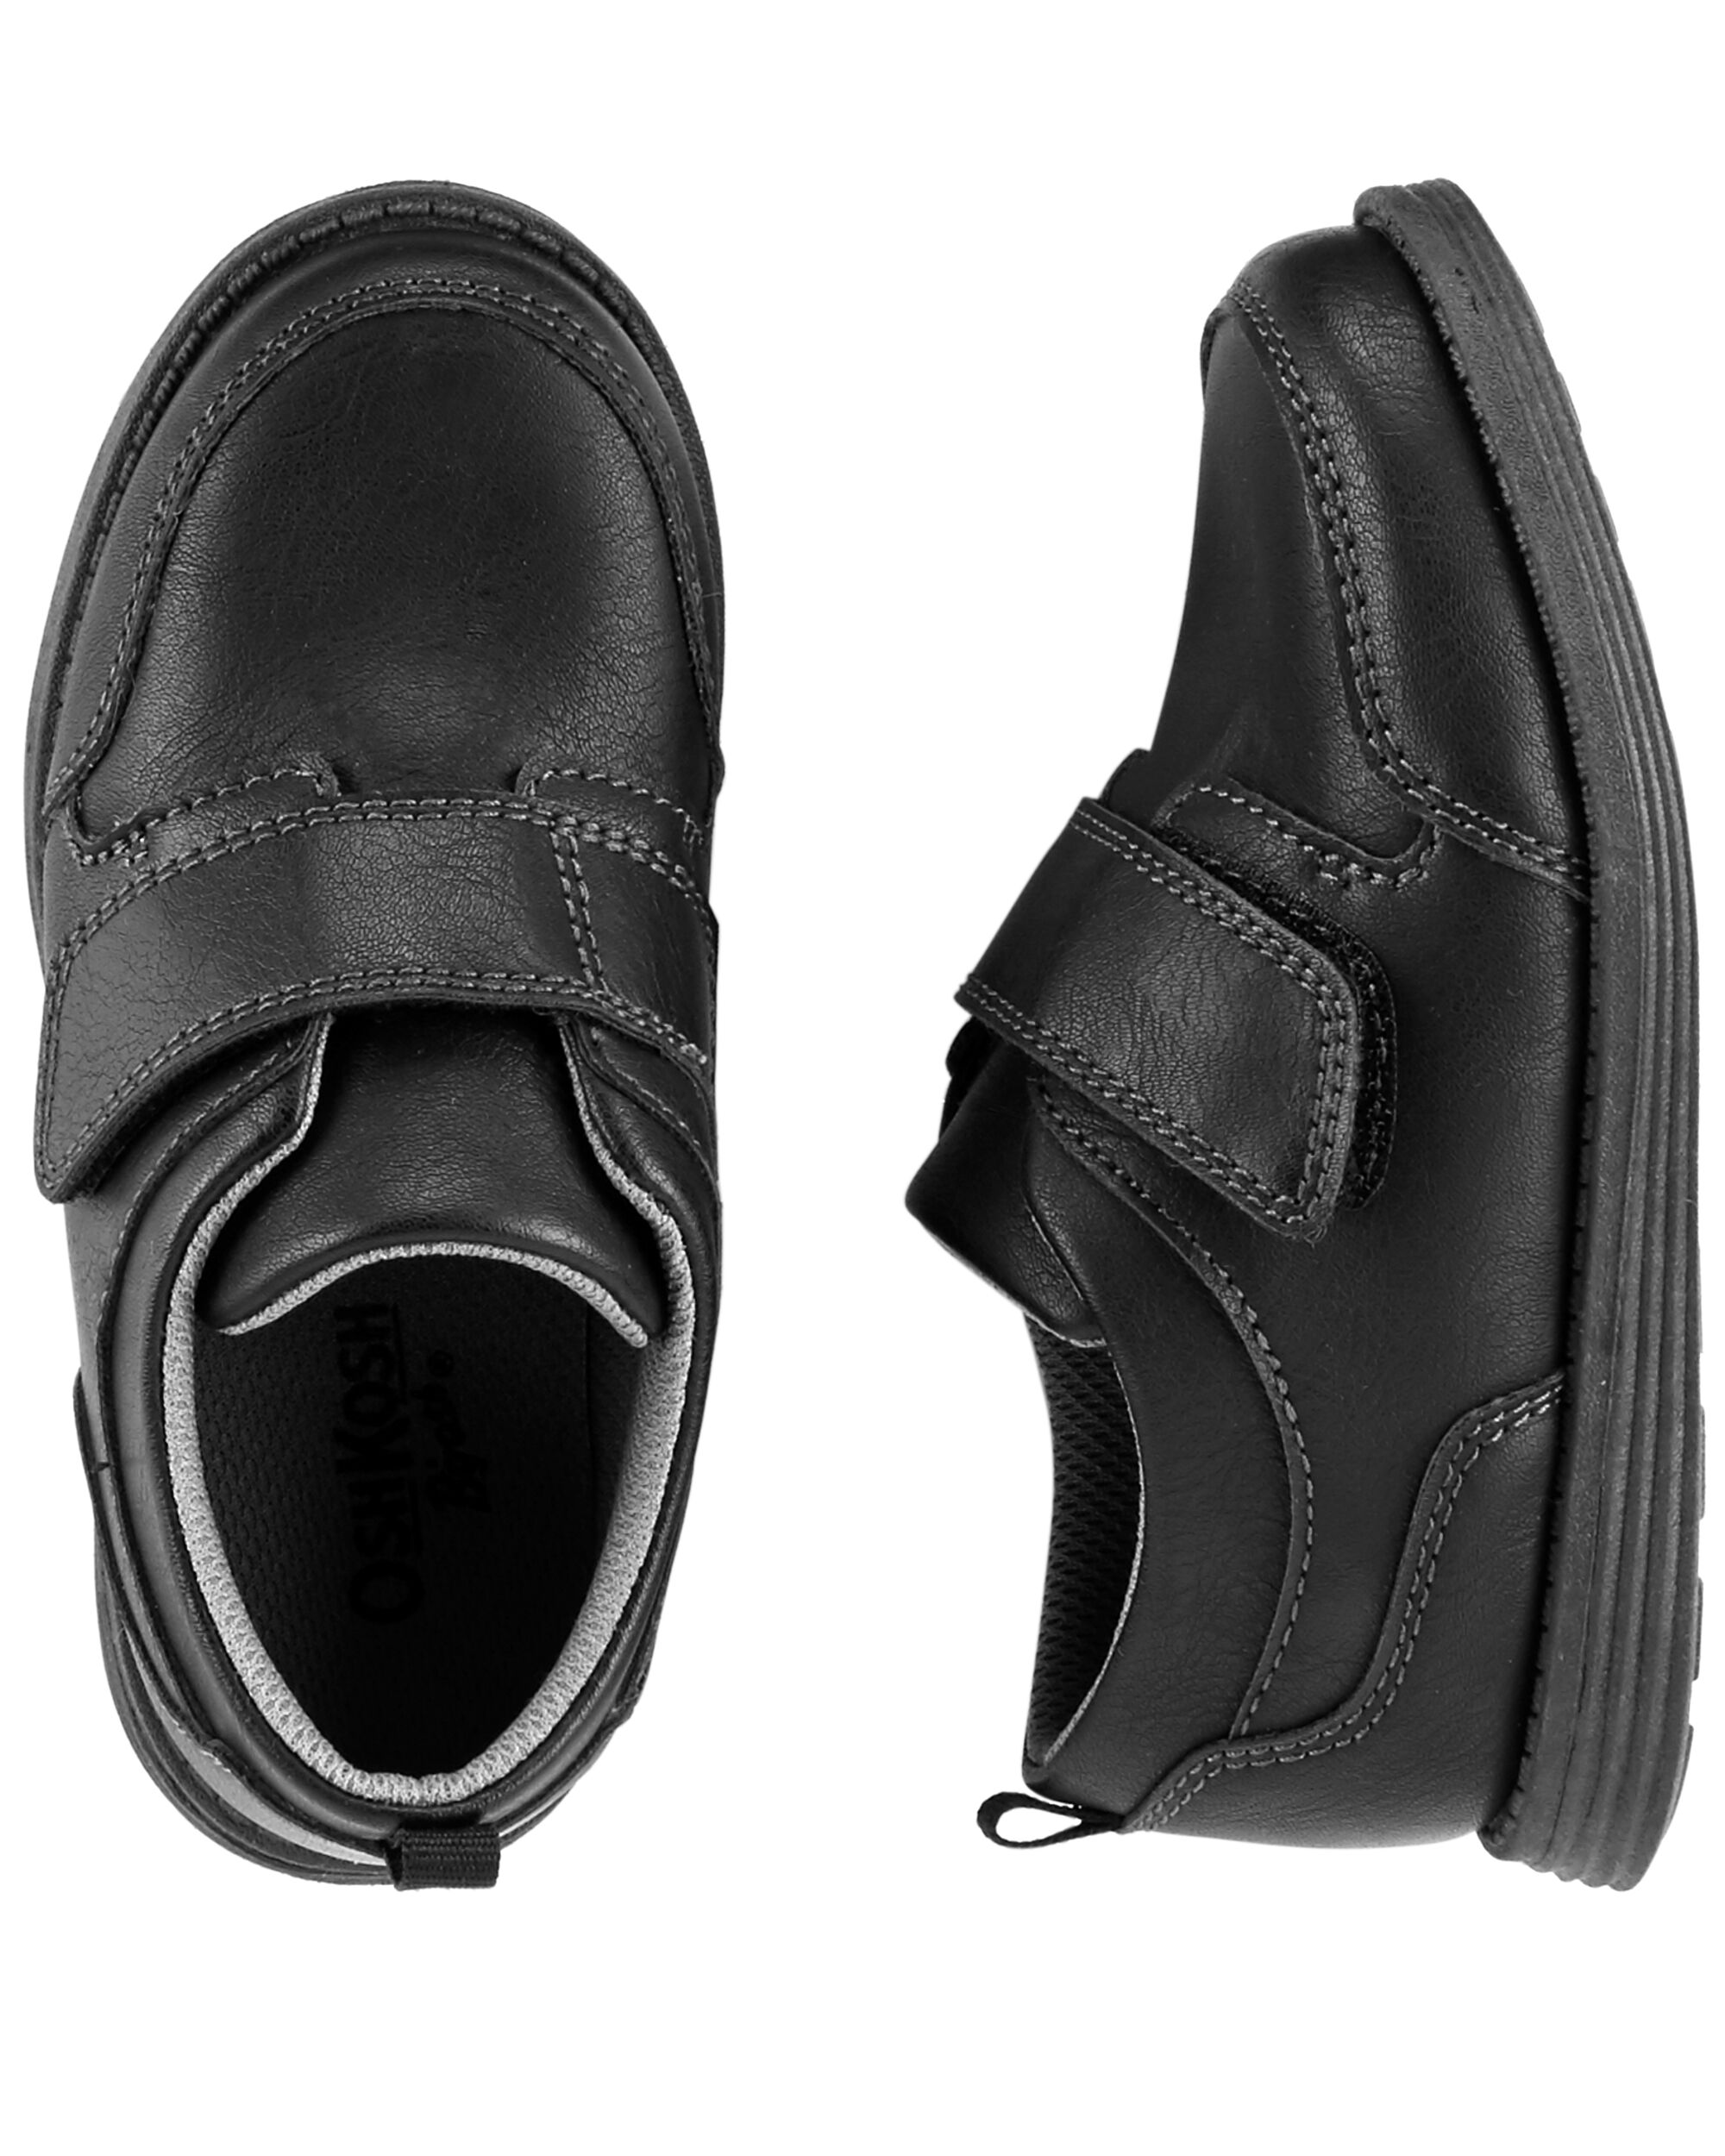 uniform shoes canada